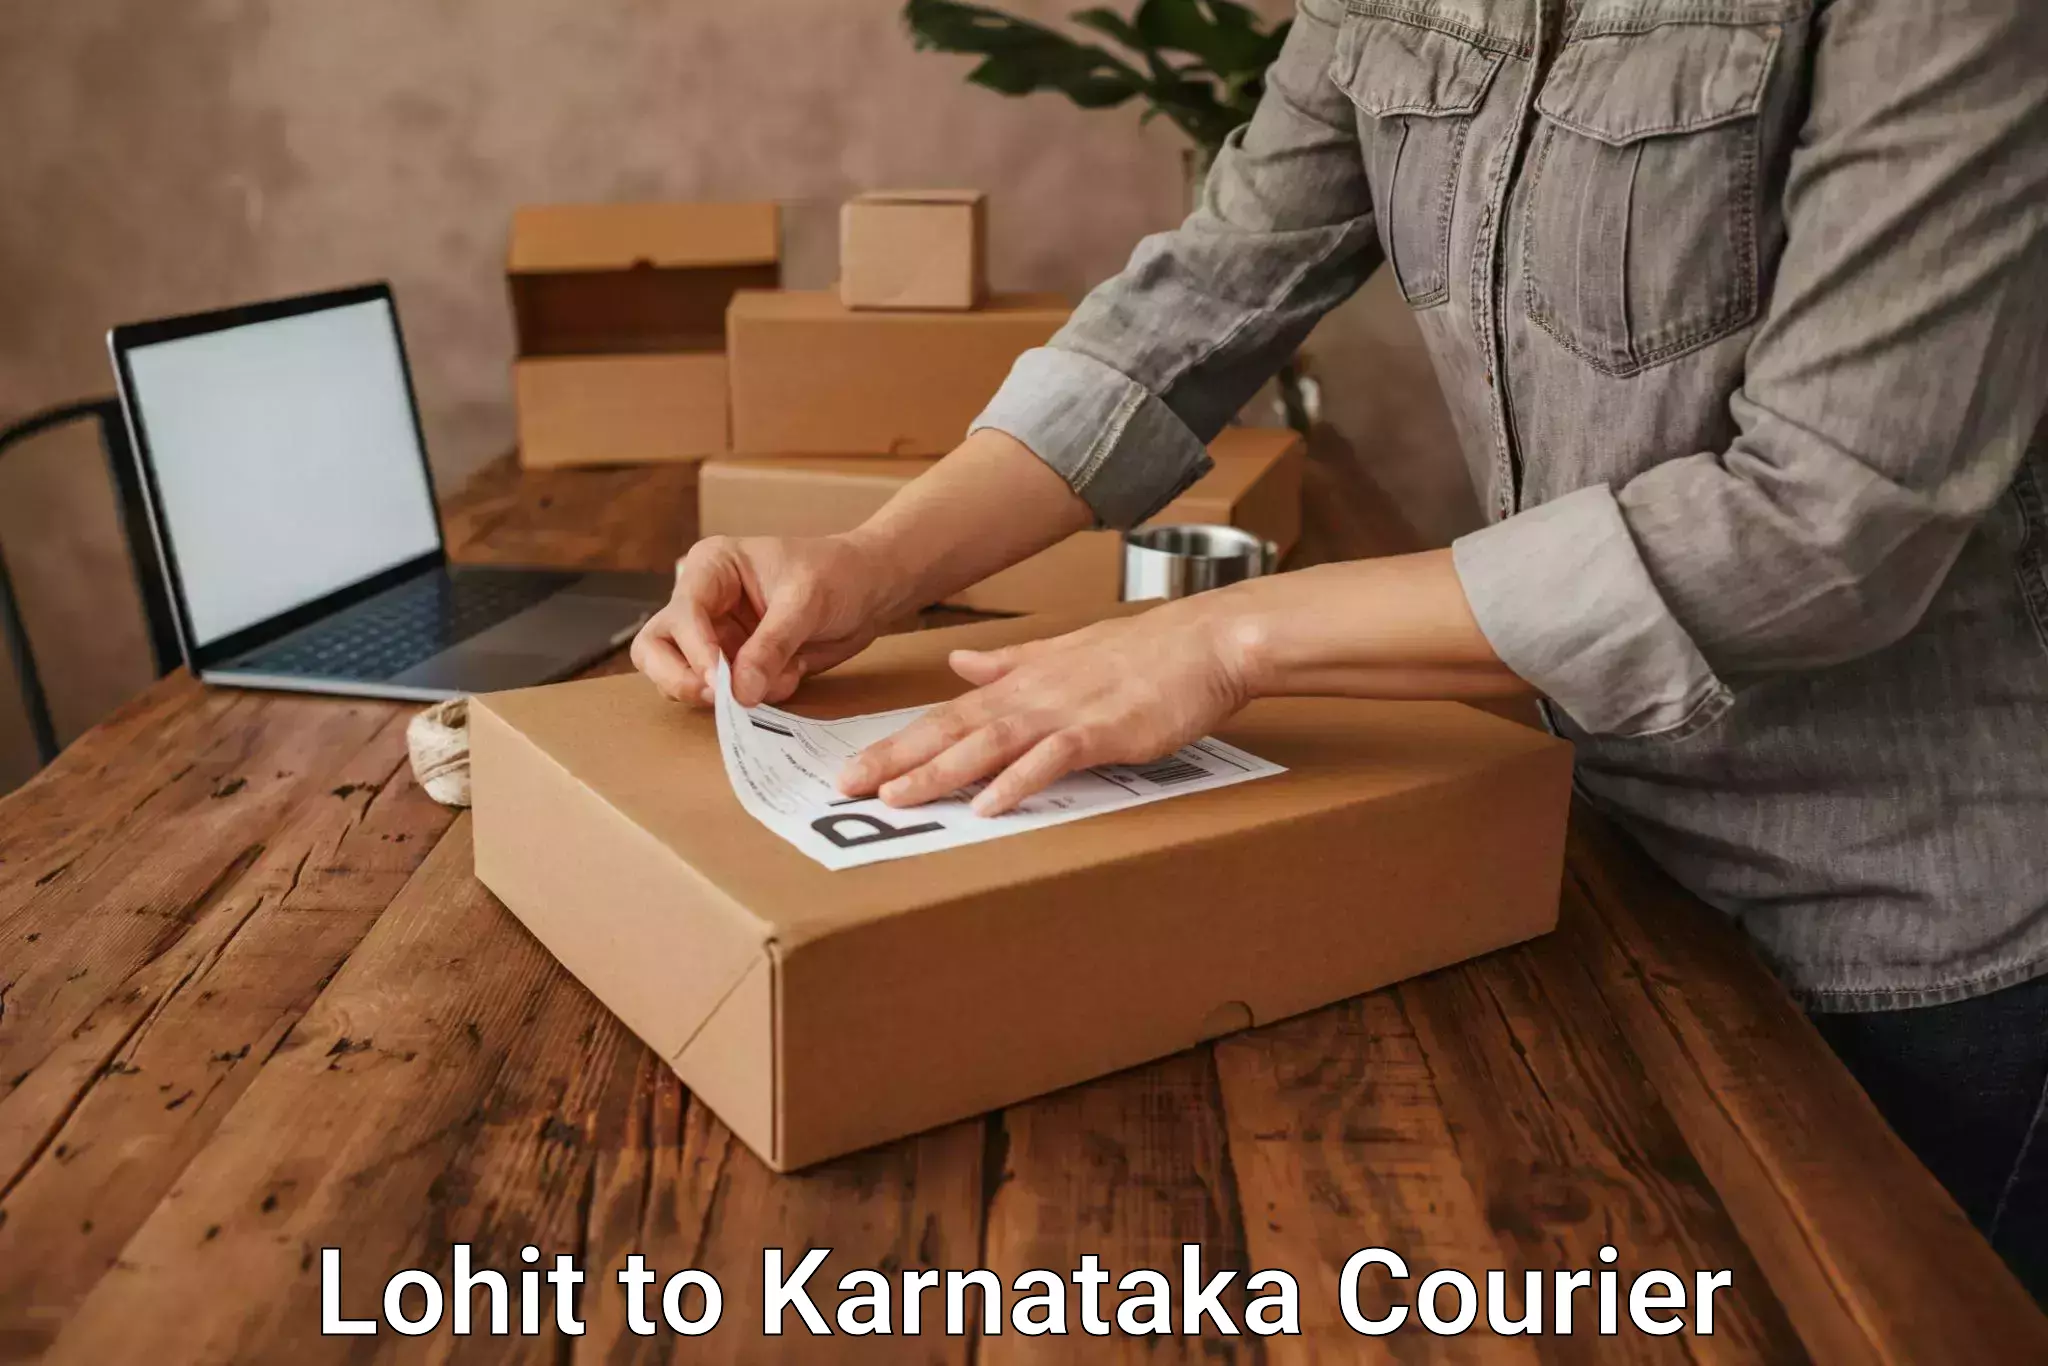 Cash on delivery service Lohit to Karnataka